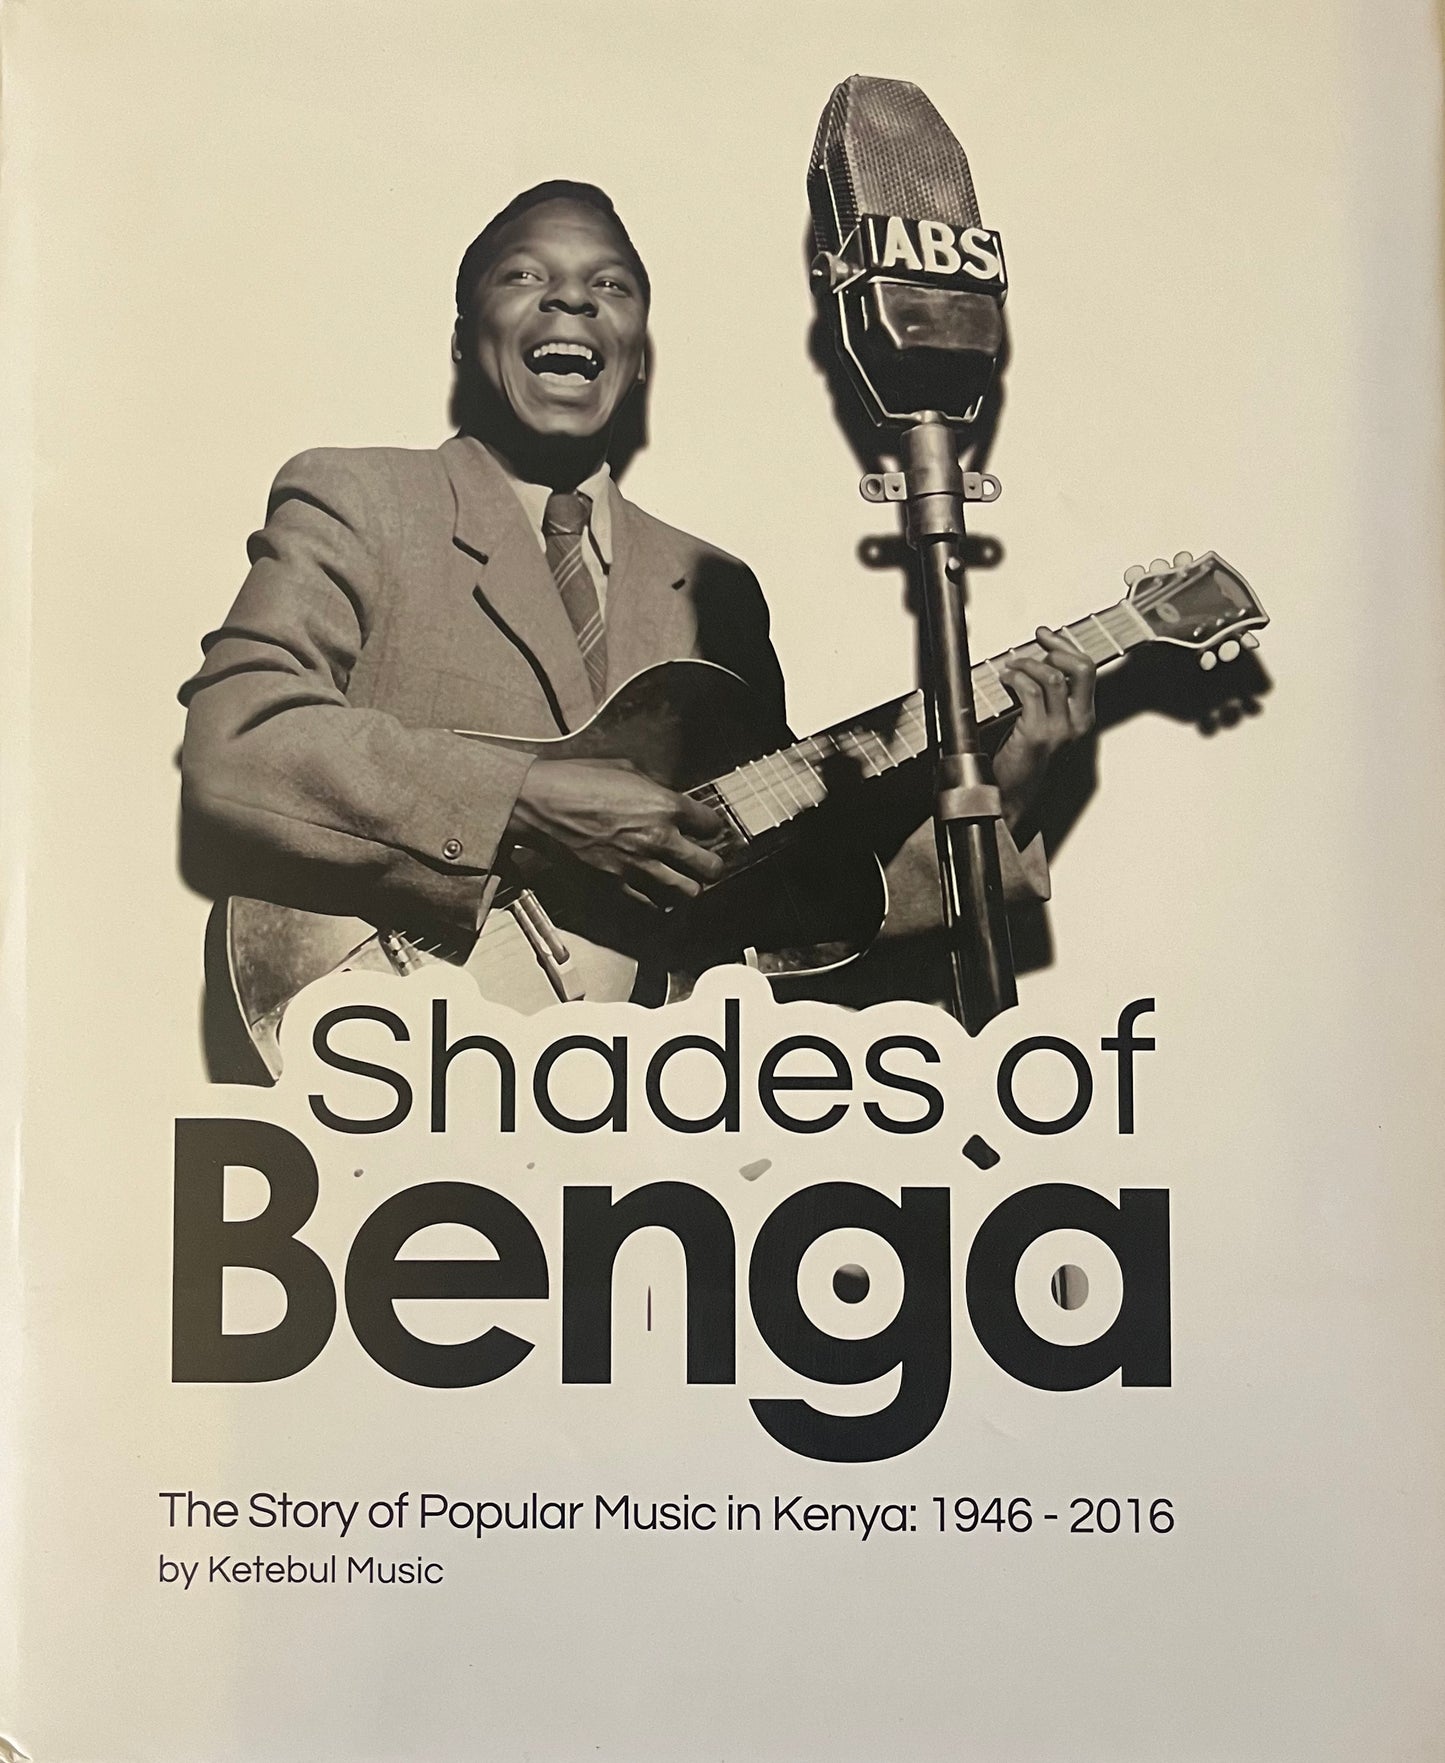 SHADES OF BENGA - Story of Popular Music in Kenya: 1946 - 2016